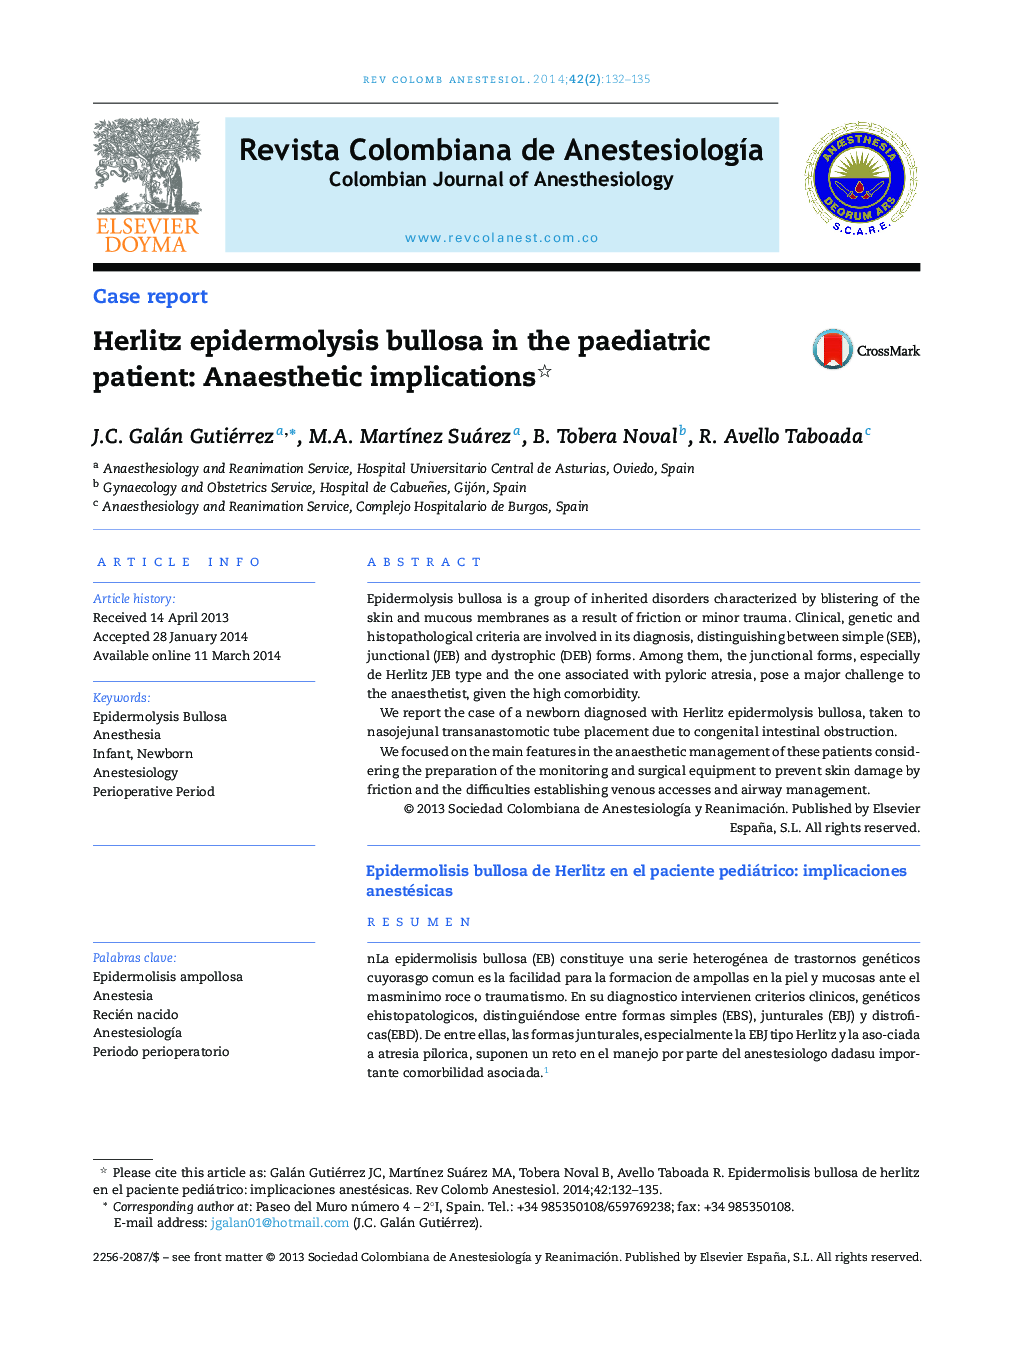 Herlitz epidermolysis bullosa in the paediatric patient: Anaesthetic implications 